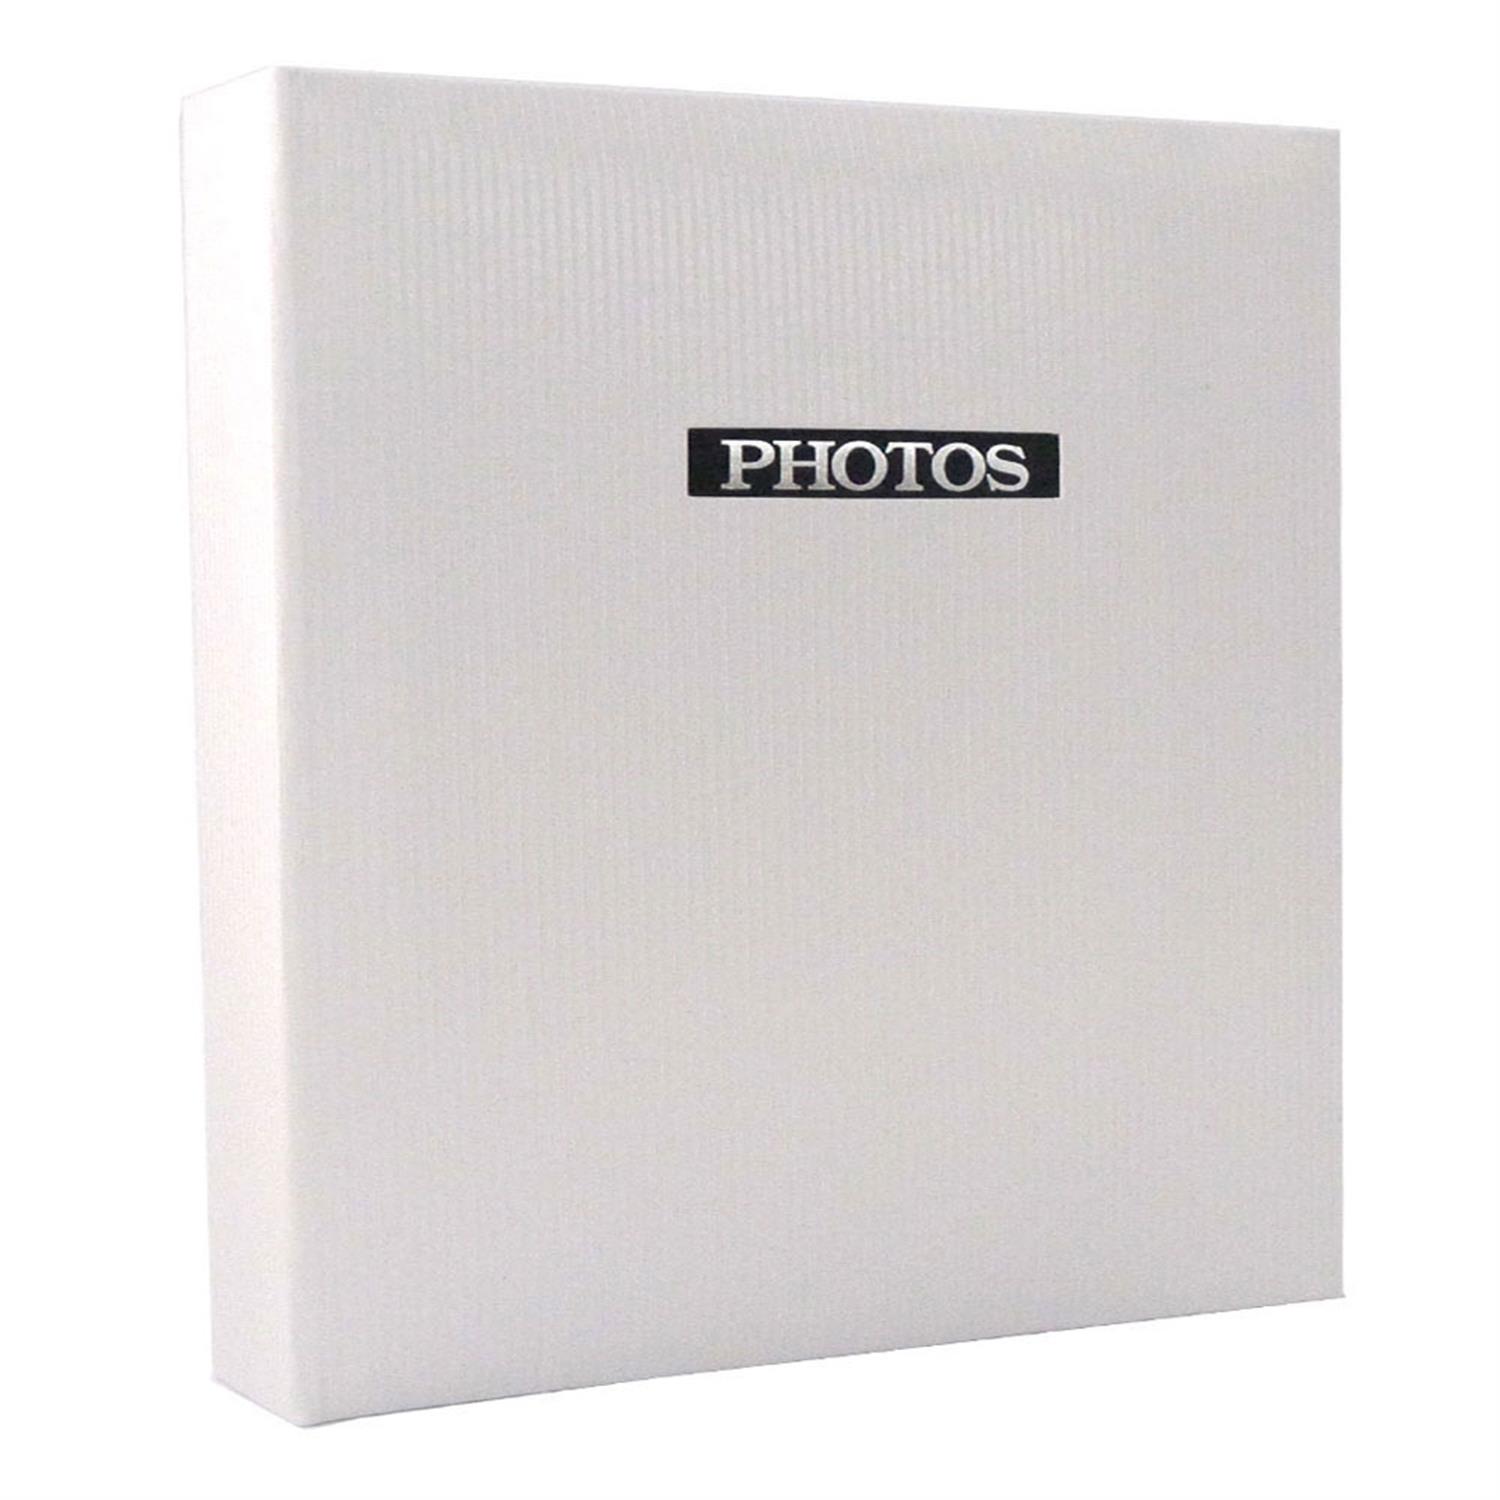 Dorr Elegance White 6x4 Slip In Photo Album - 200 Photos